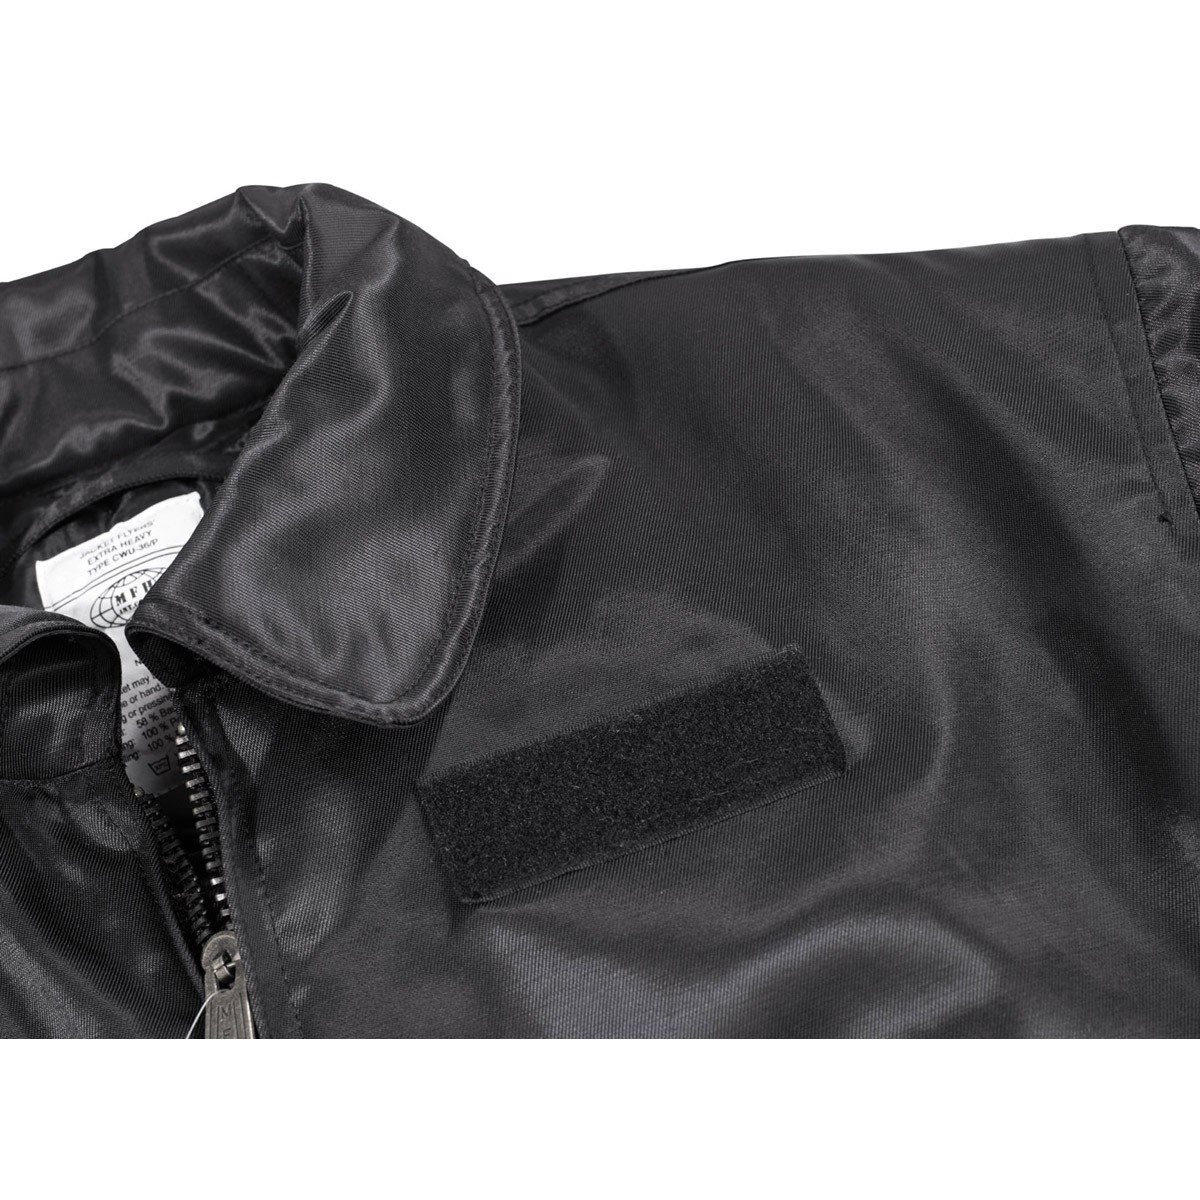 Jacket CWU solid material BLACK MFH int. comp. 03742A L-11